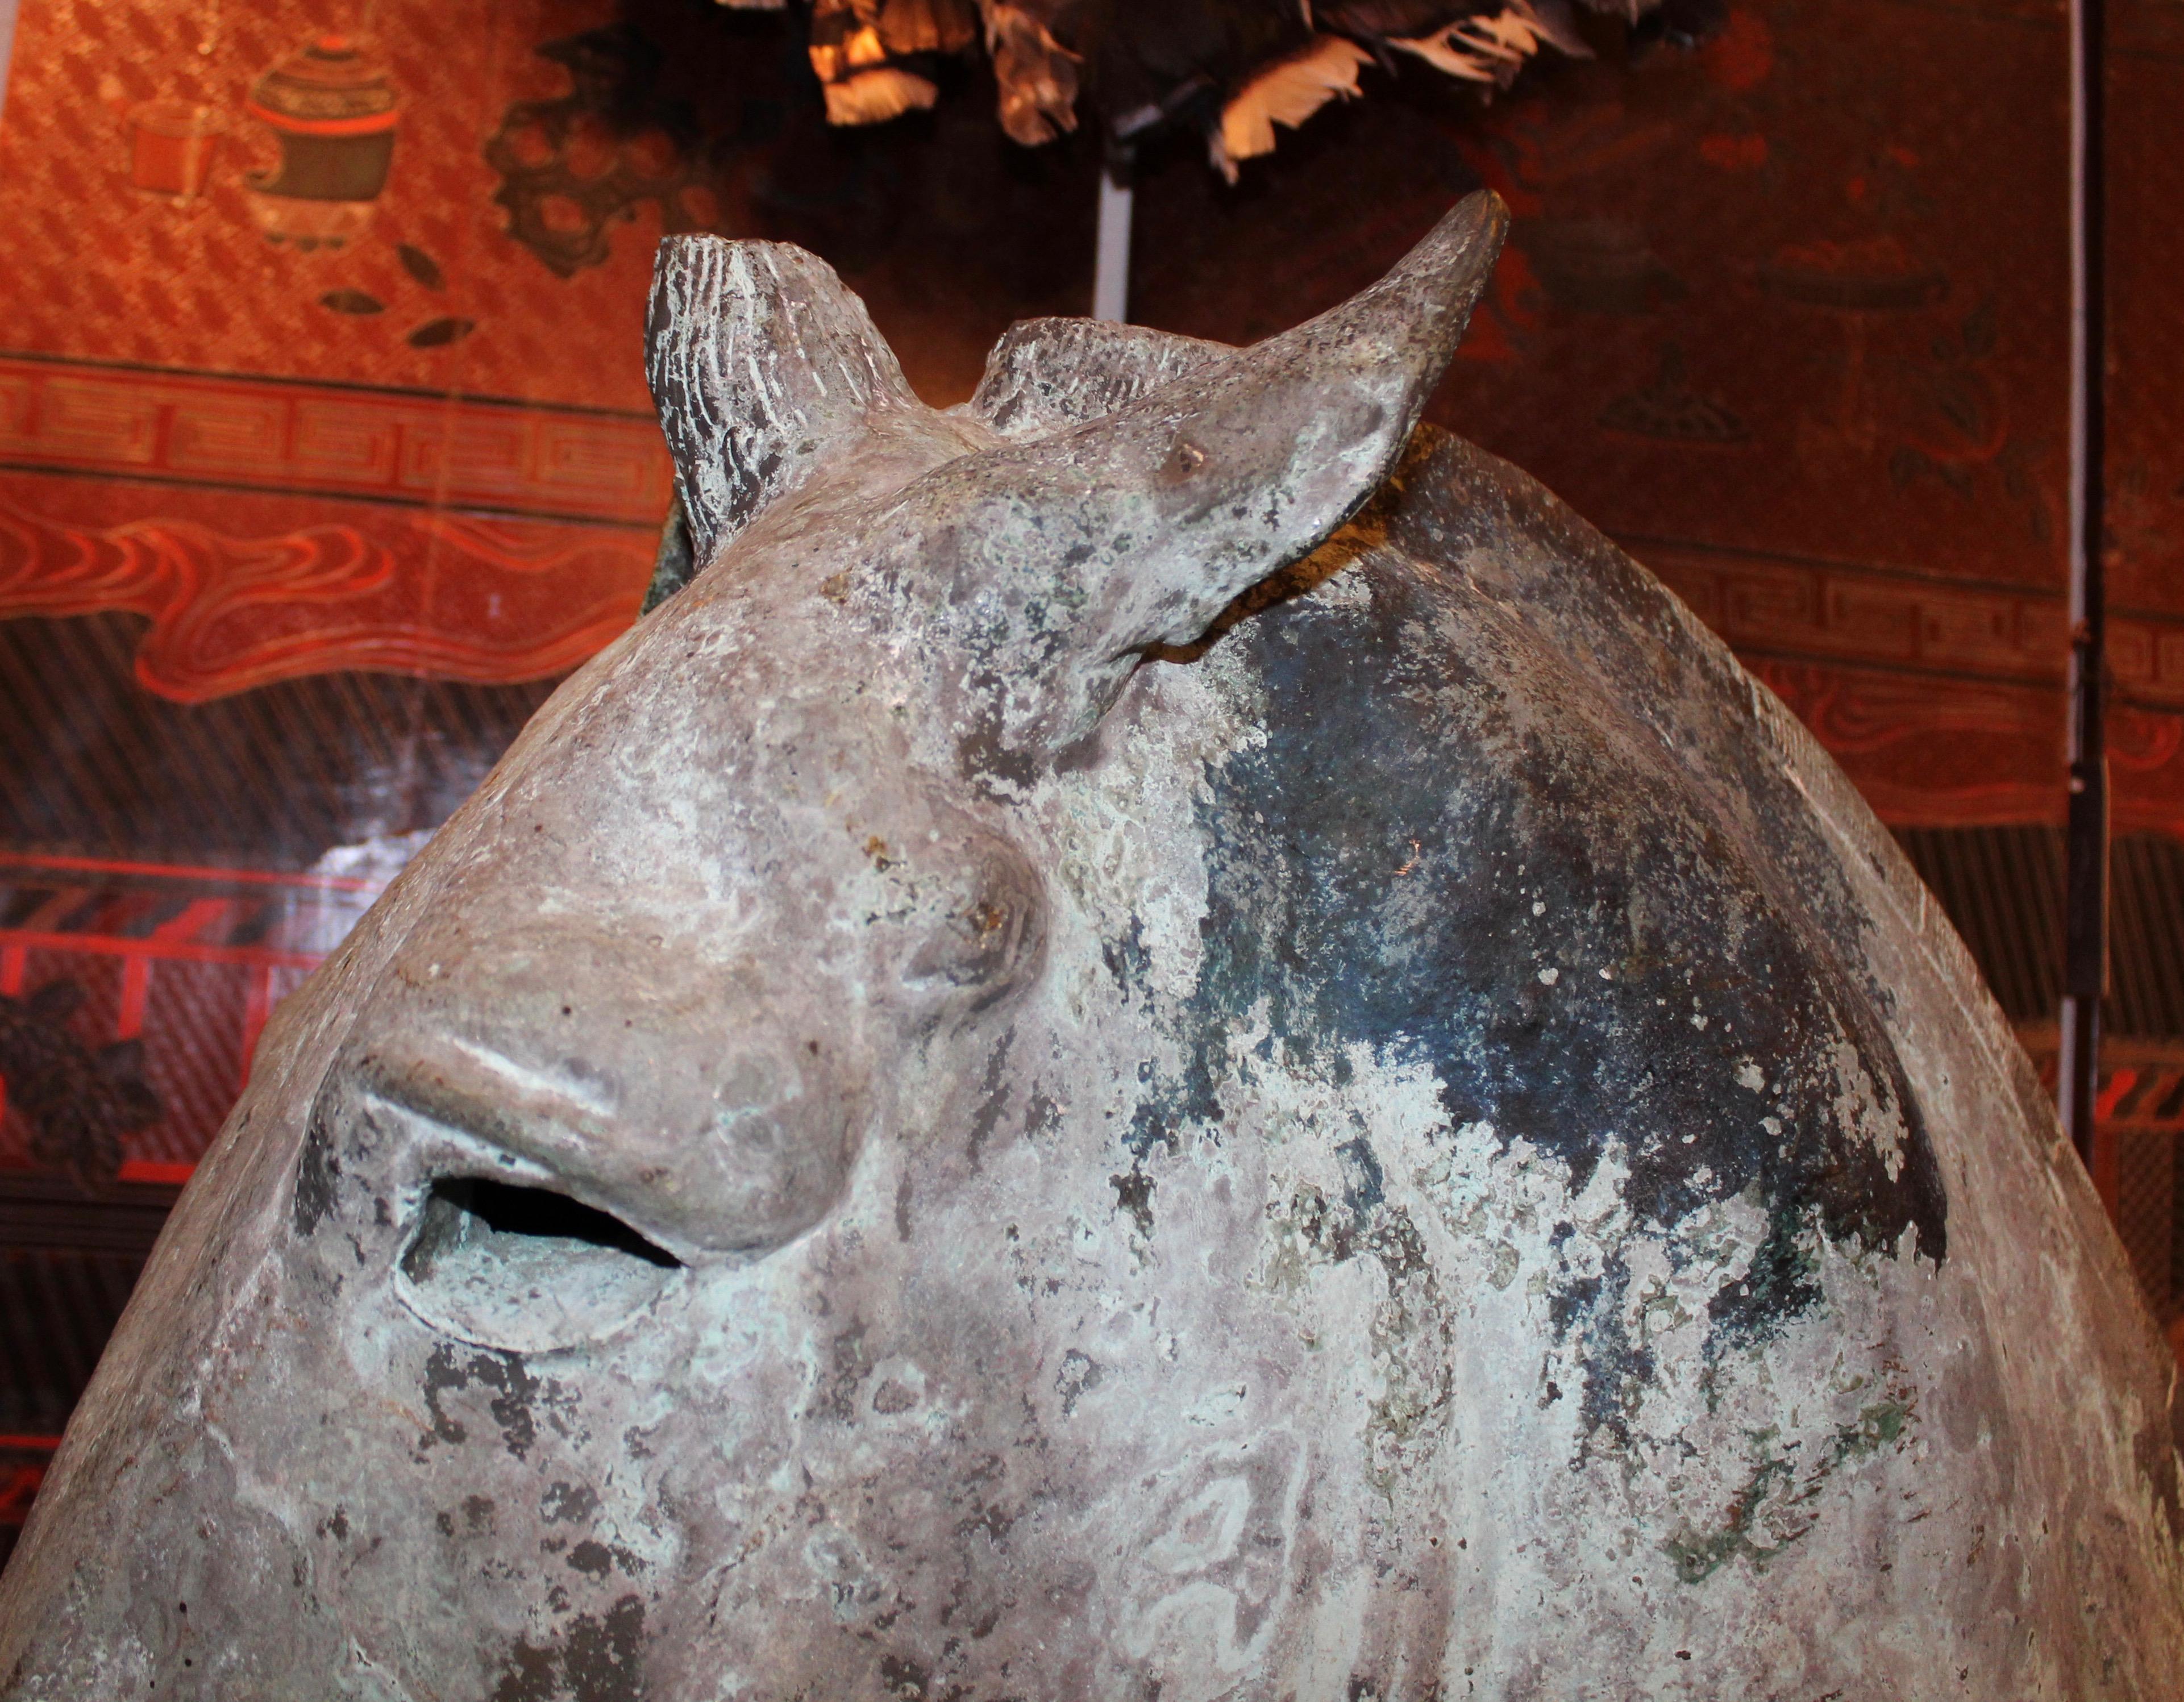 bronze horse head sculpture